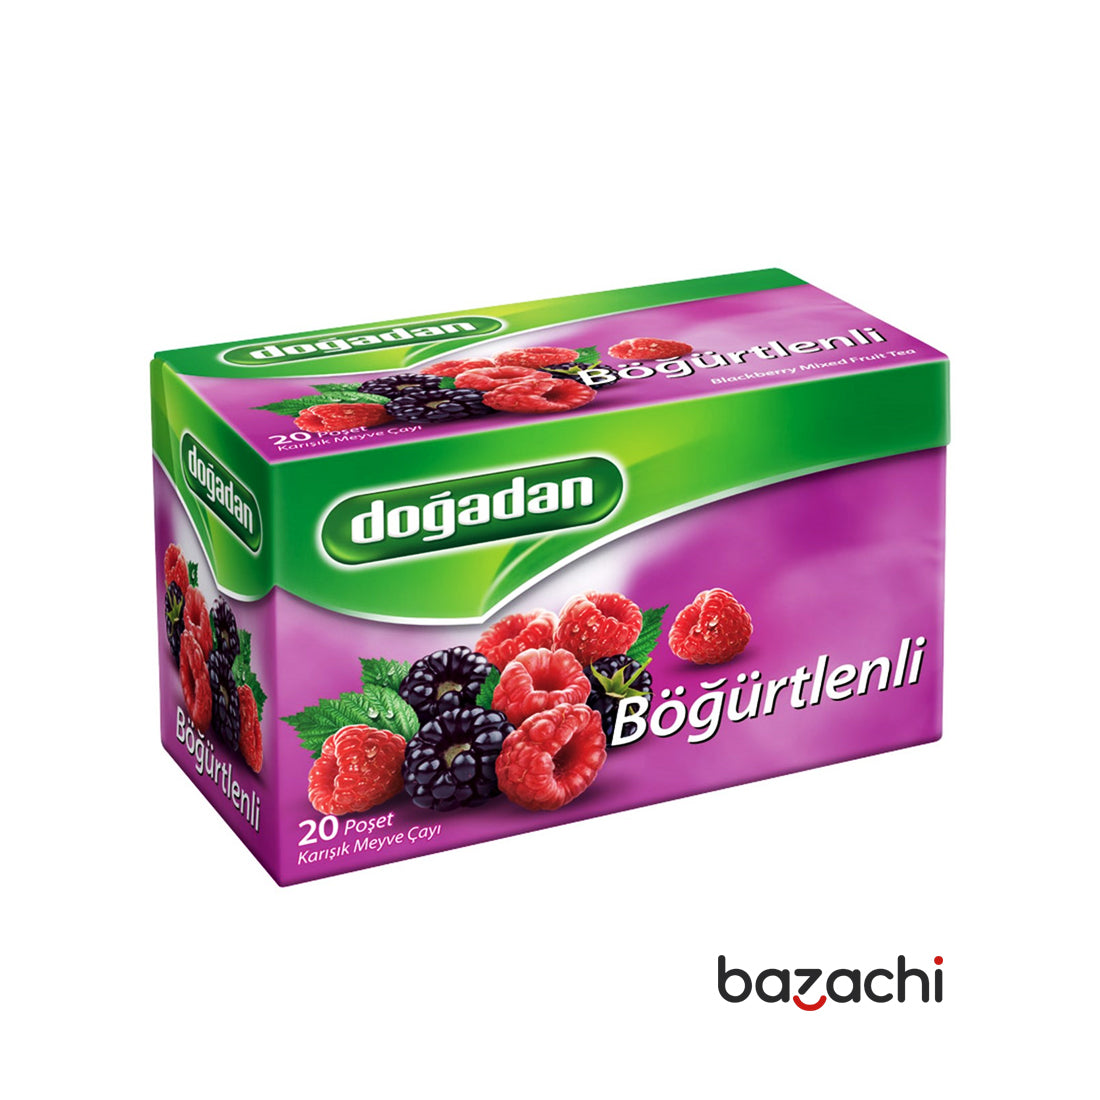 Dogadan Blackberry Mixed Fruit Tea Bogurtlen Cay 20 Tea Bags